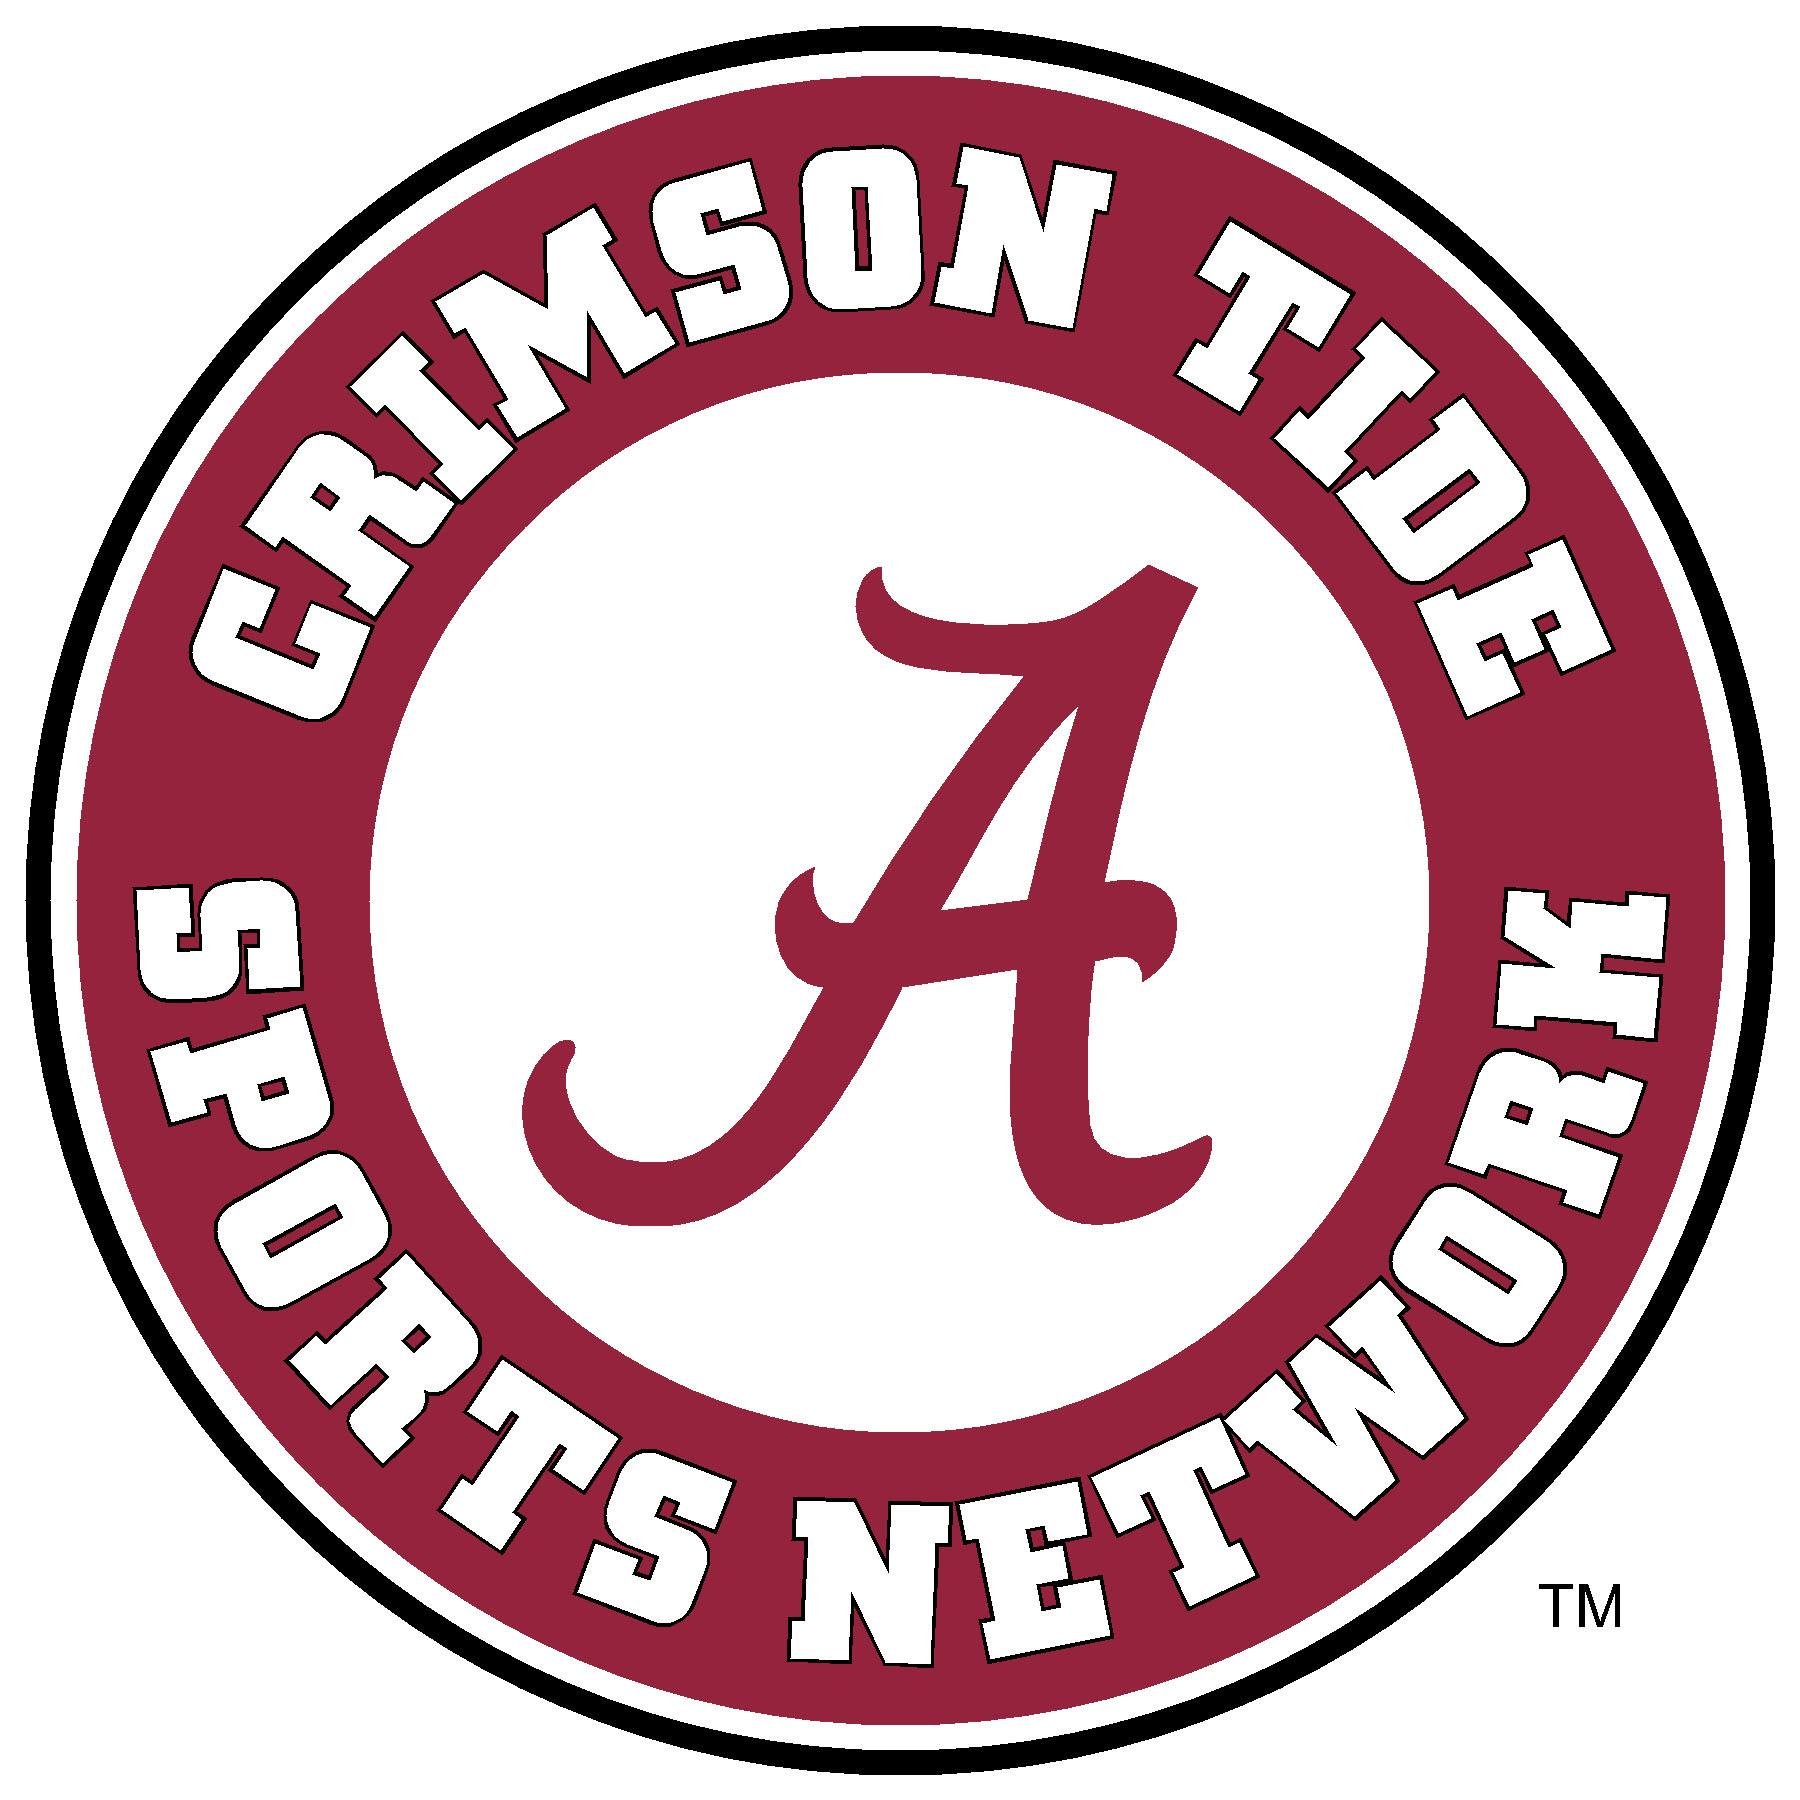 Official Radio Network of The Alabama Crimson Tide